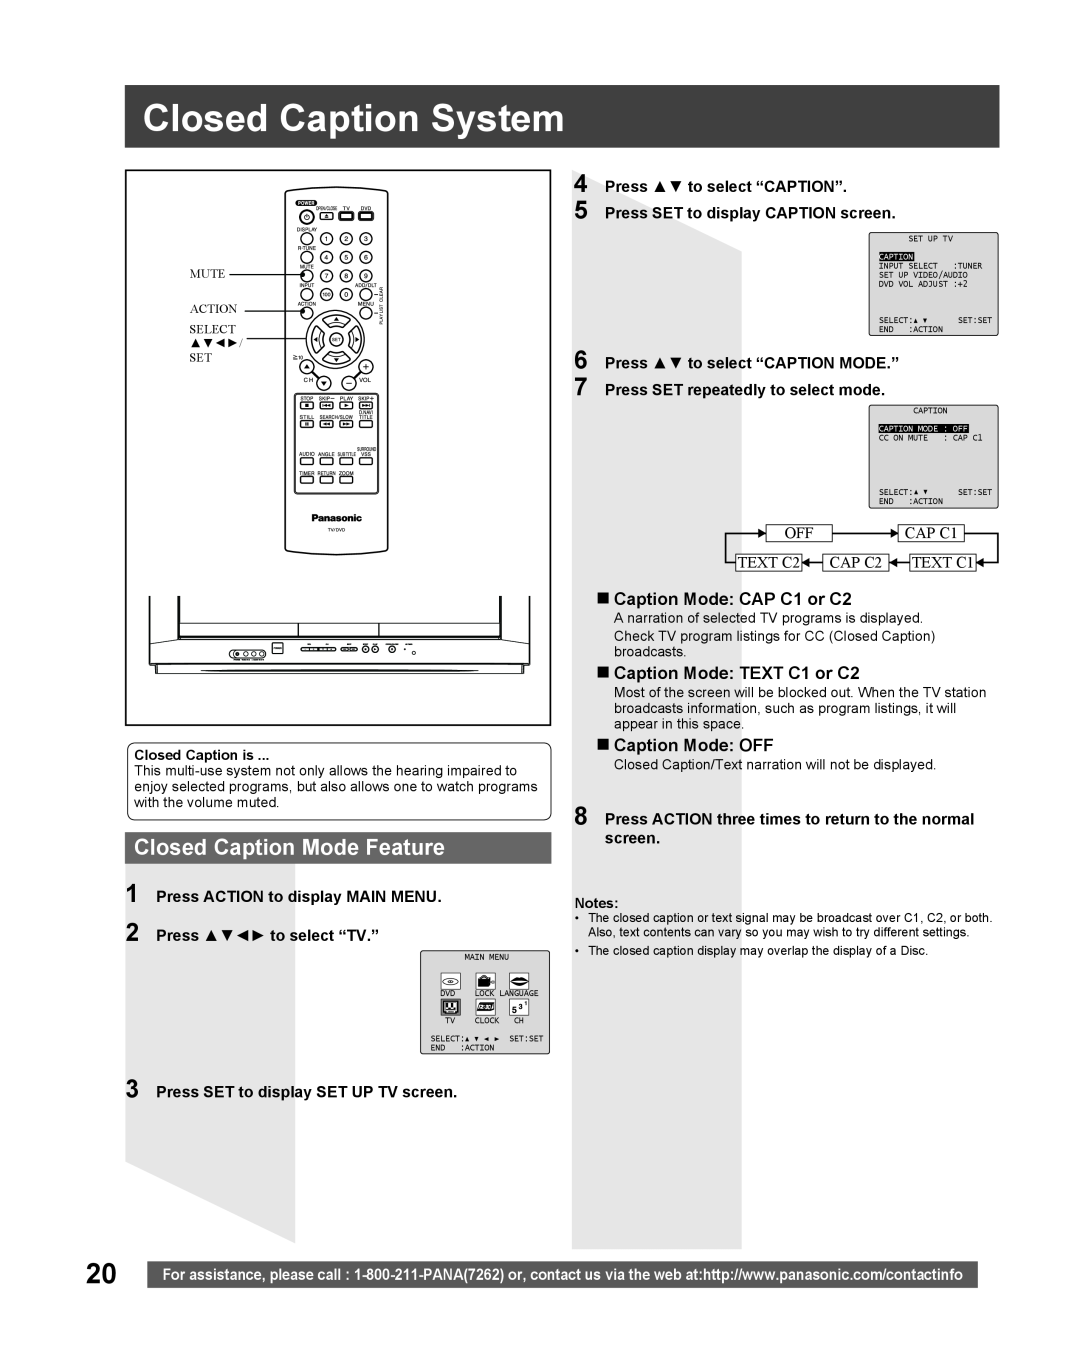 Panasonic PV-27DF5 Closed Caption System, Closed Caption Mode Feature, „ Caption Mode CAP C1 or C2, „ Caption Mode OFF 